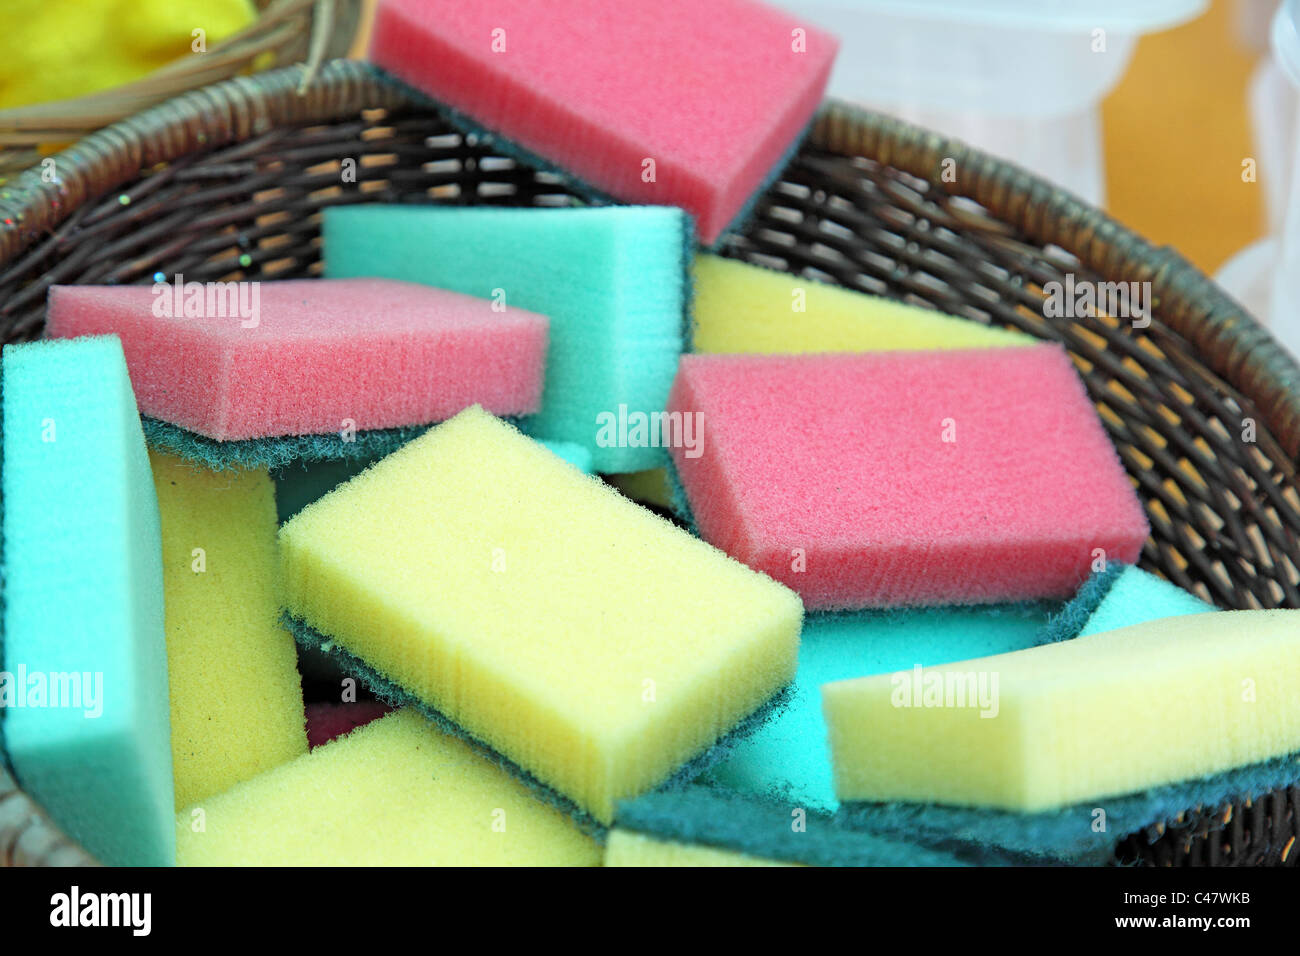 kitchen sponges Stock Photo